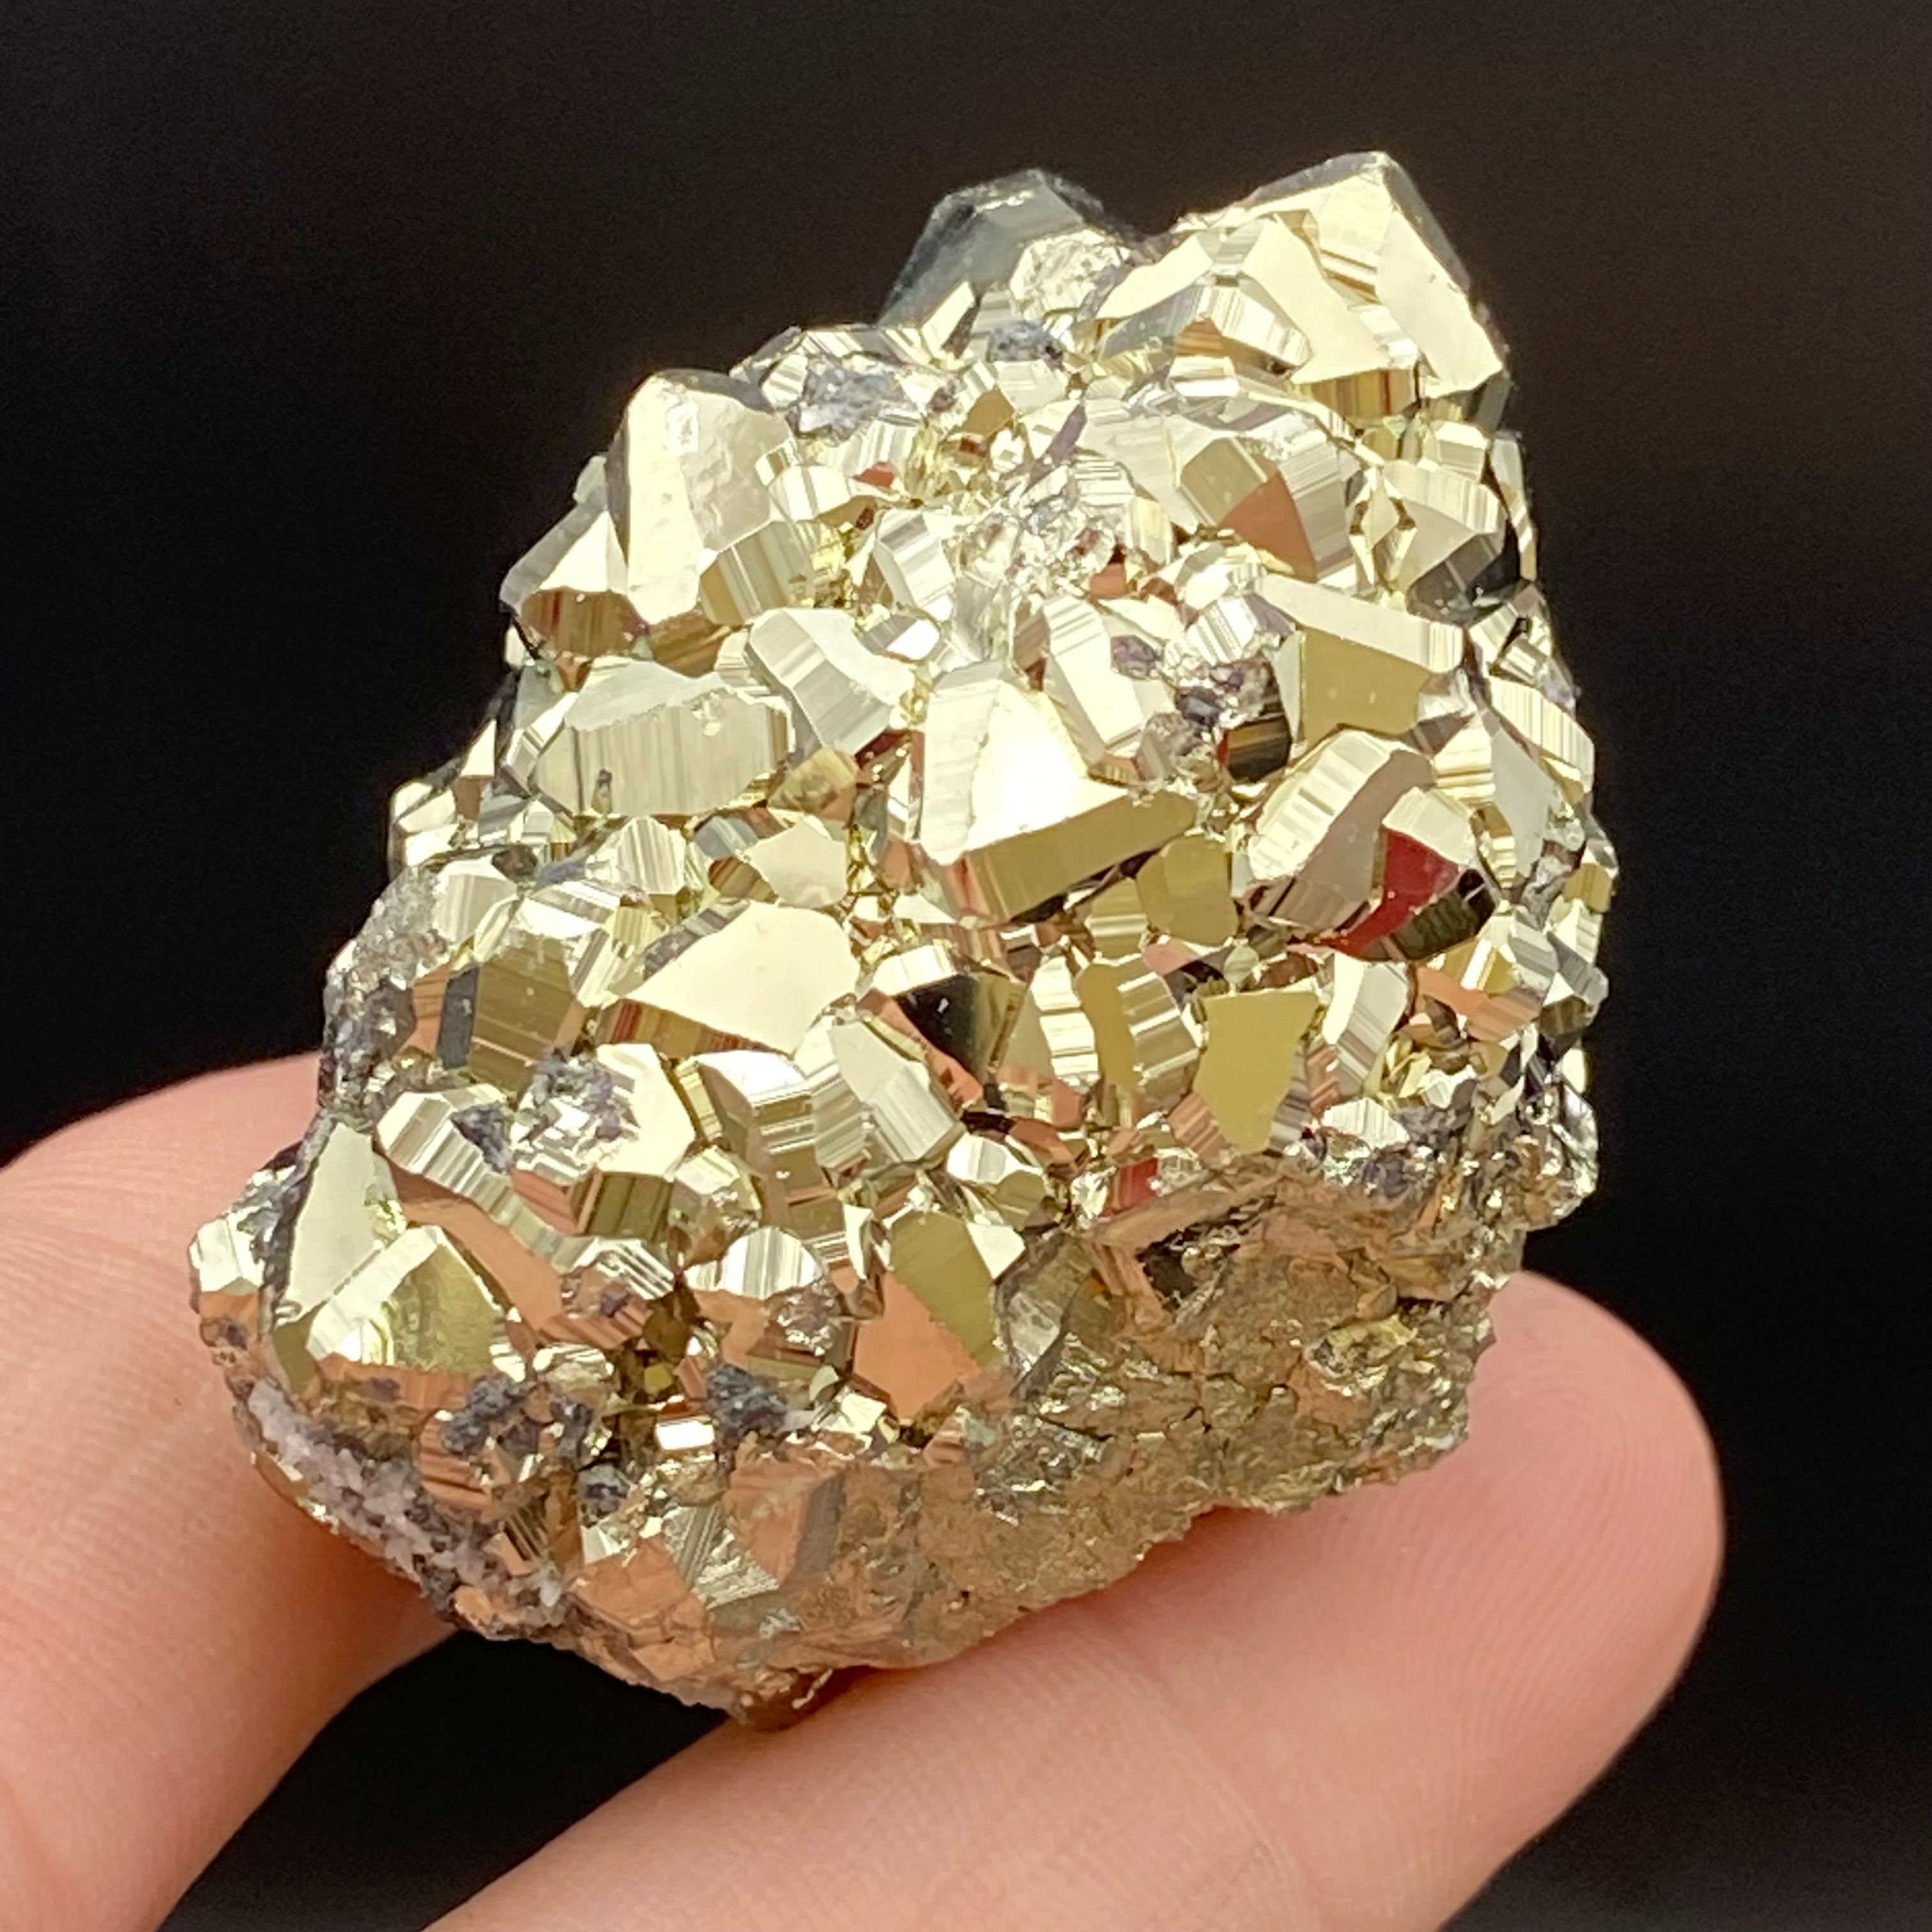 Peruvian Pyrite Crystal - 014